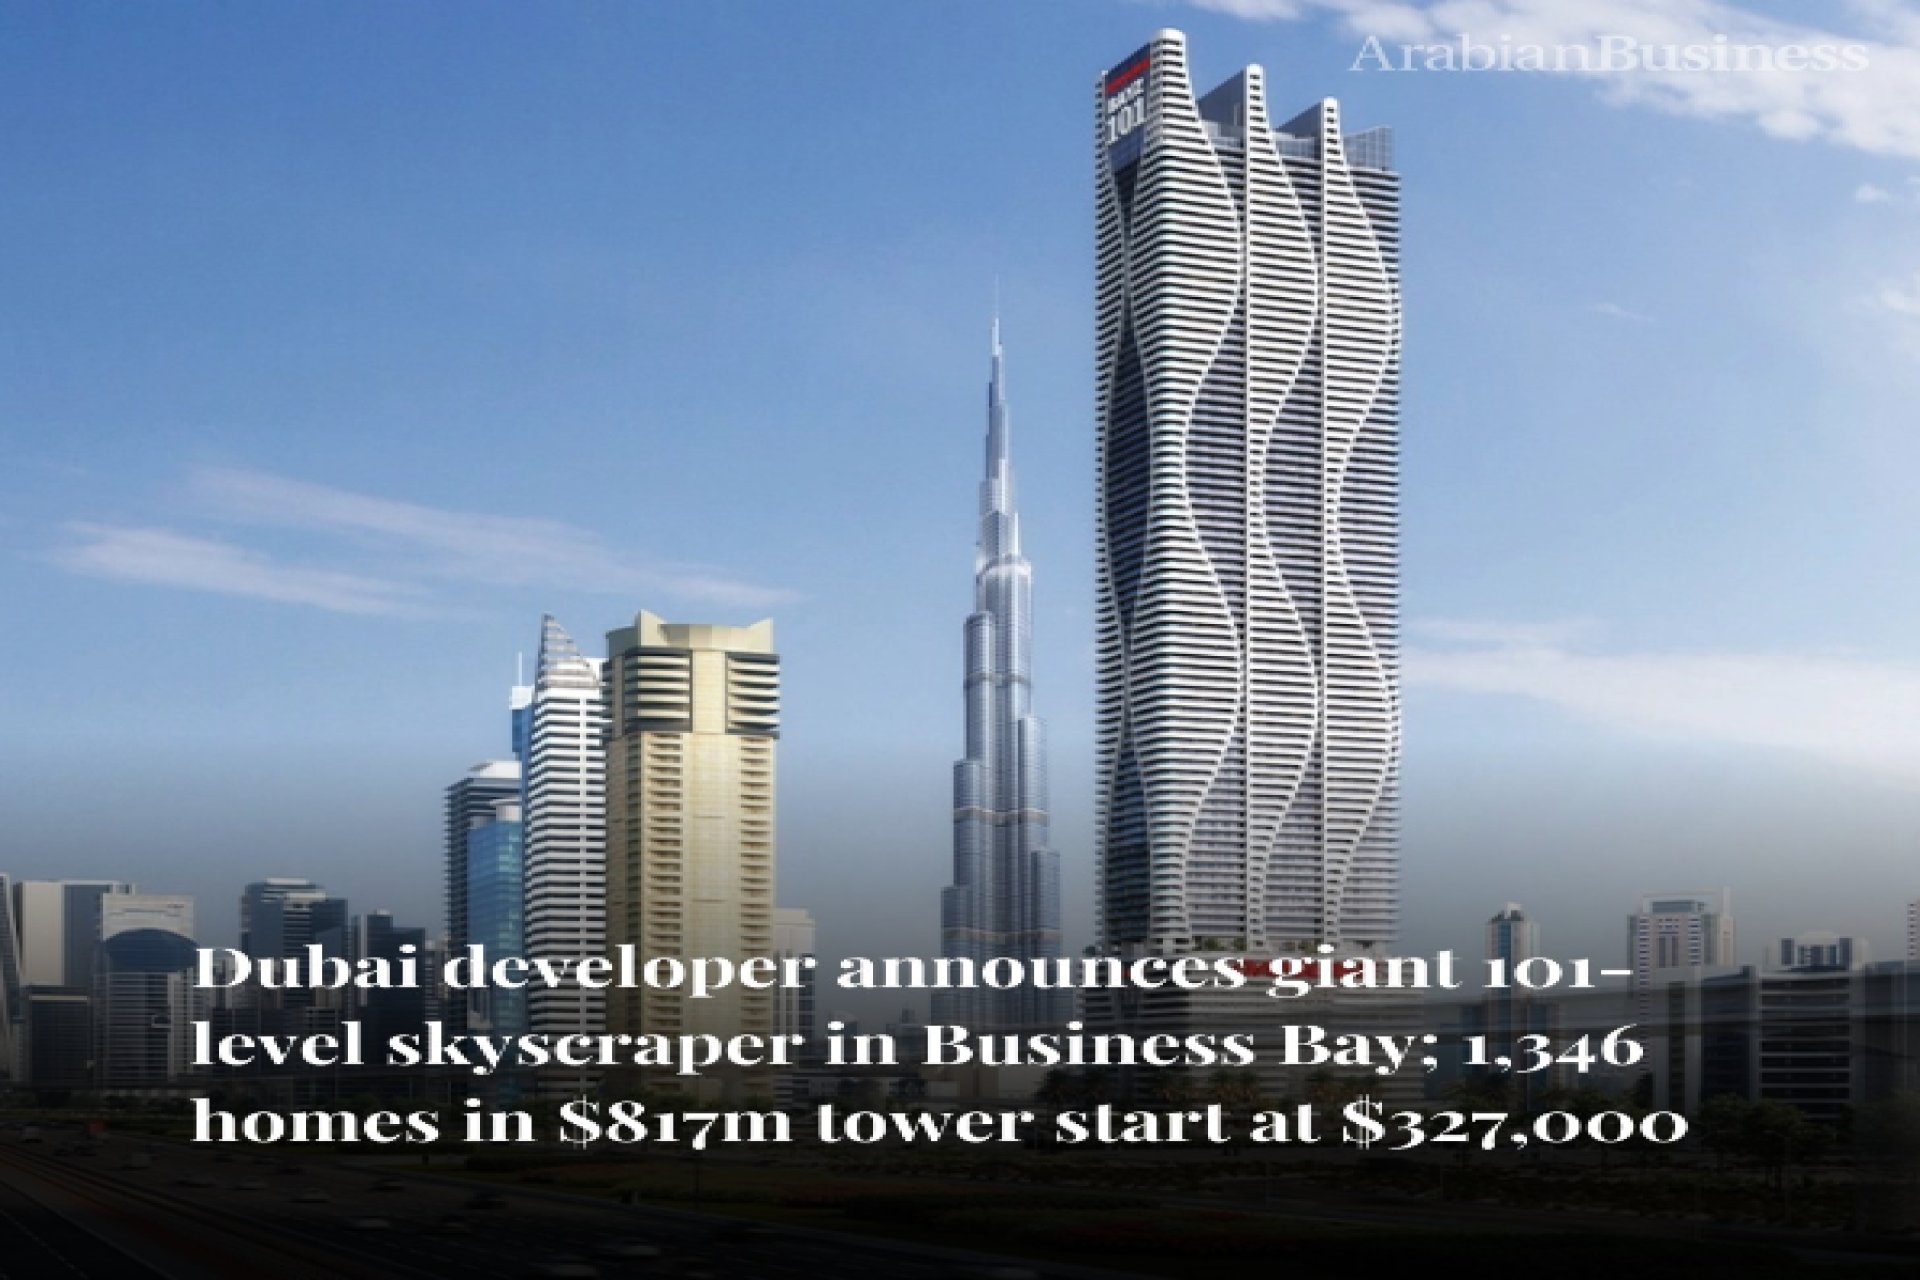 One of Dubai's prominent construction companies announces a massive 101-level skyscraper in Business Bay